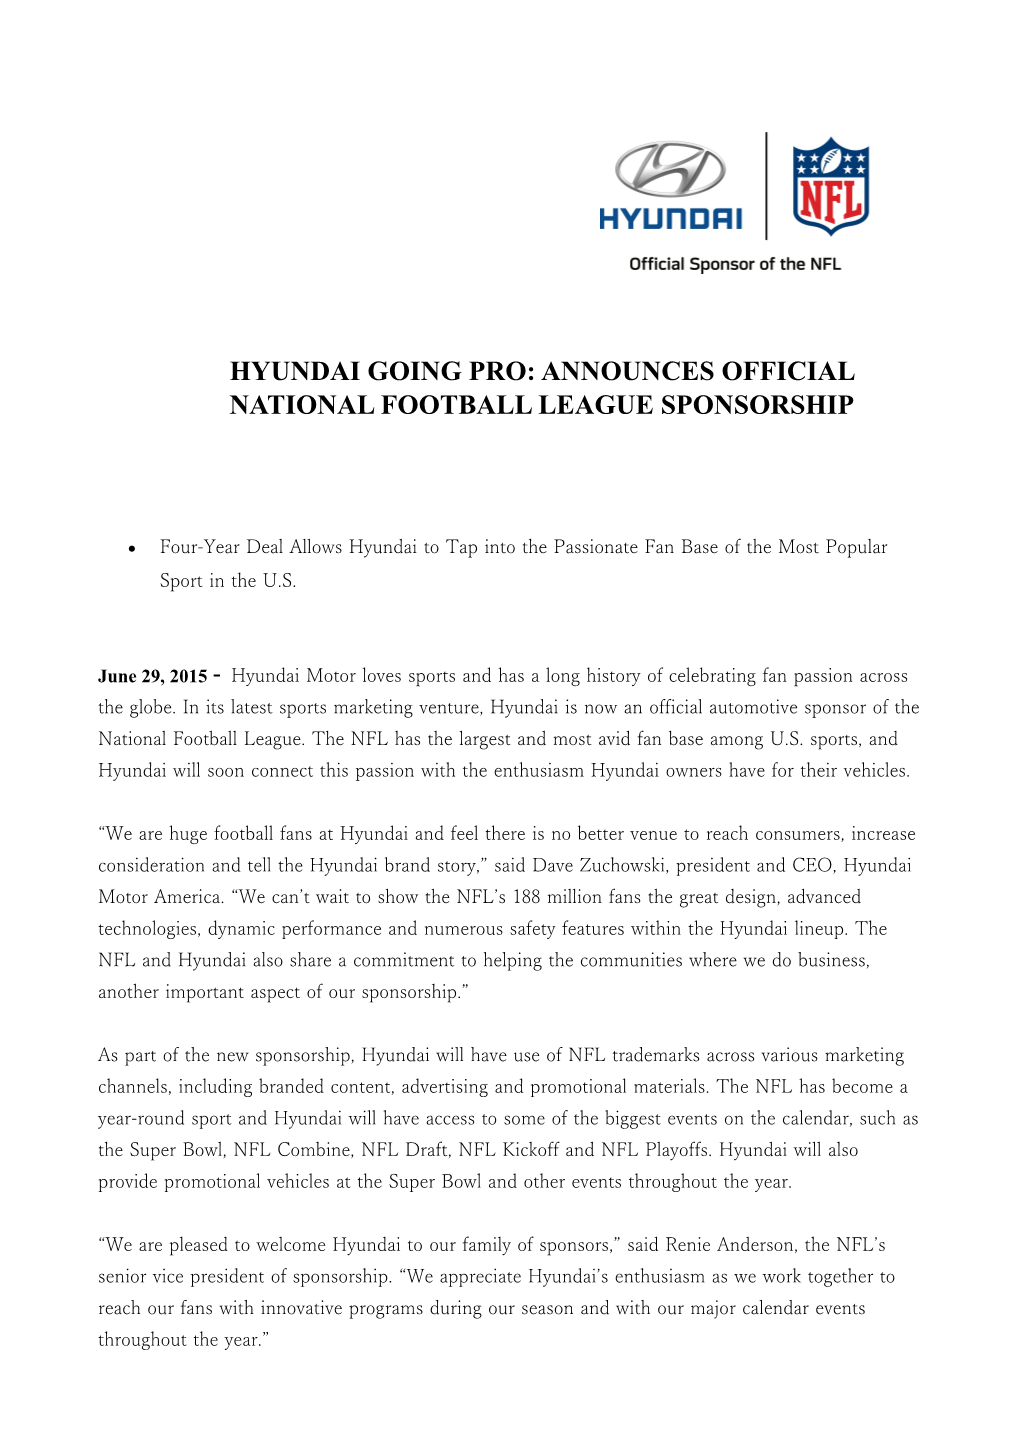 Hyundai Going Pro: Announces Official National Football League Sponsorship